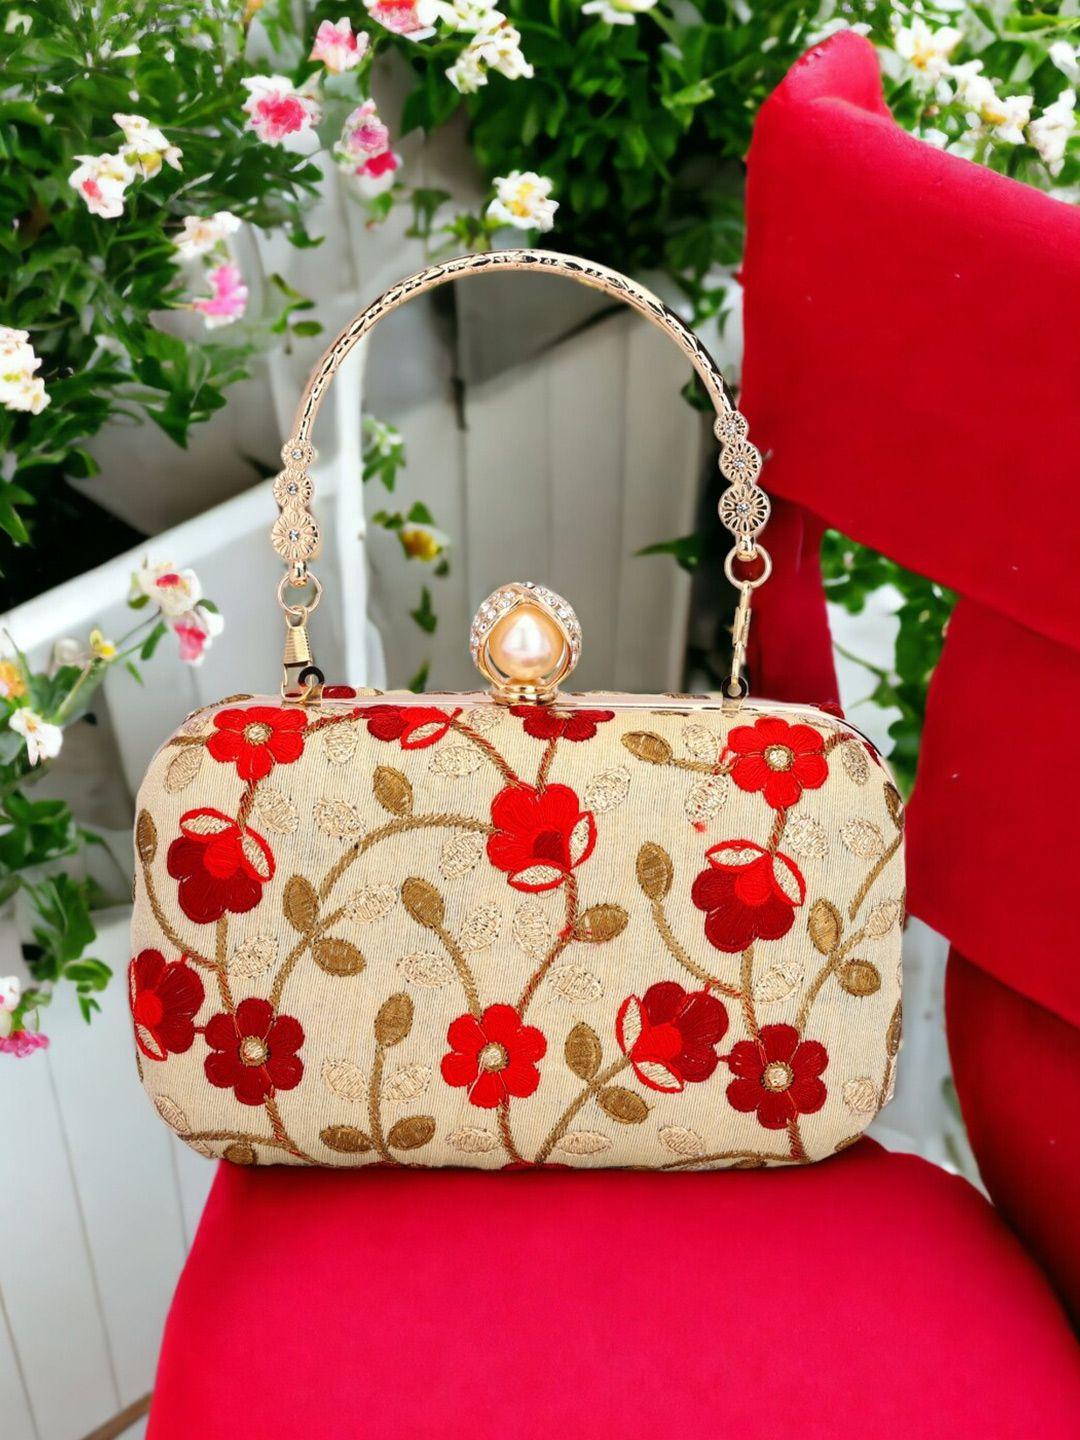 toobacraft floral embroidered embellished box clutch